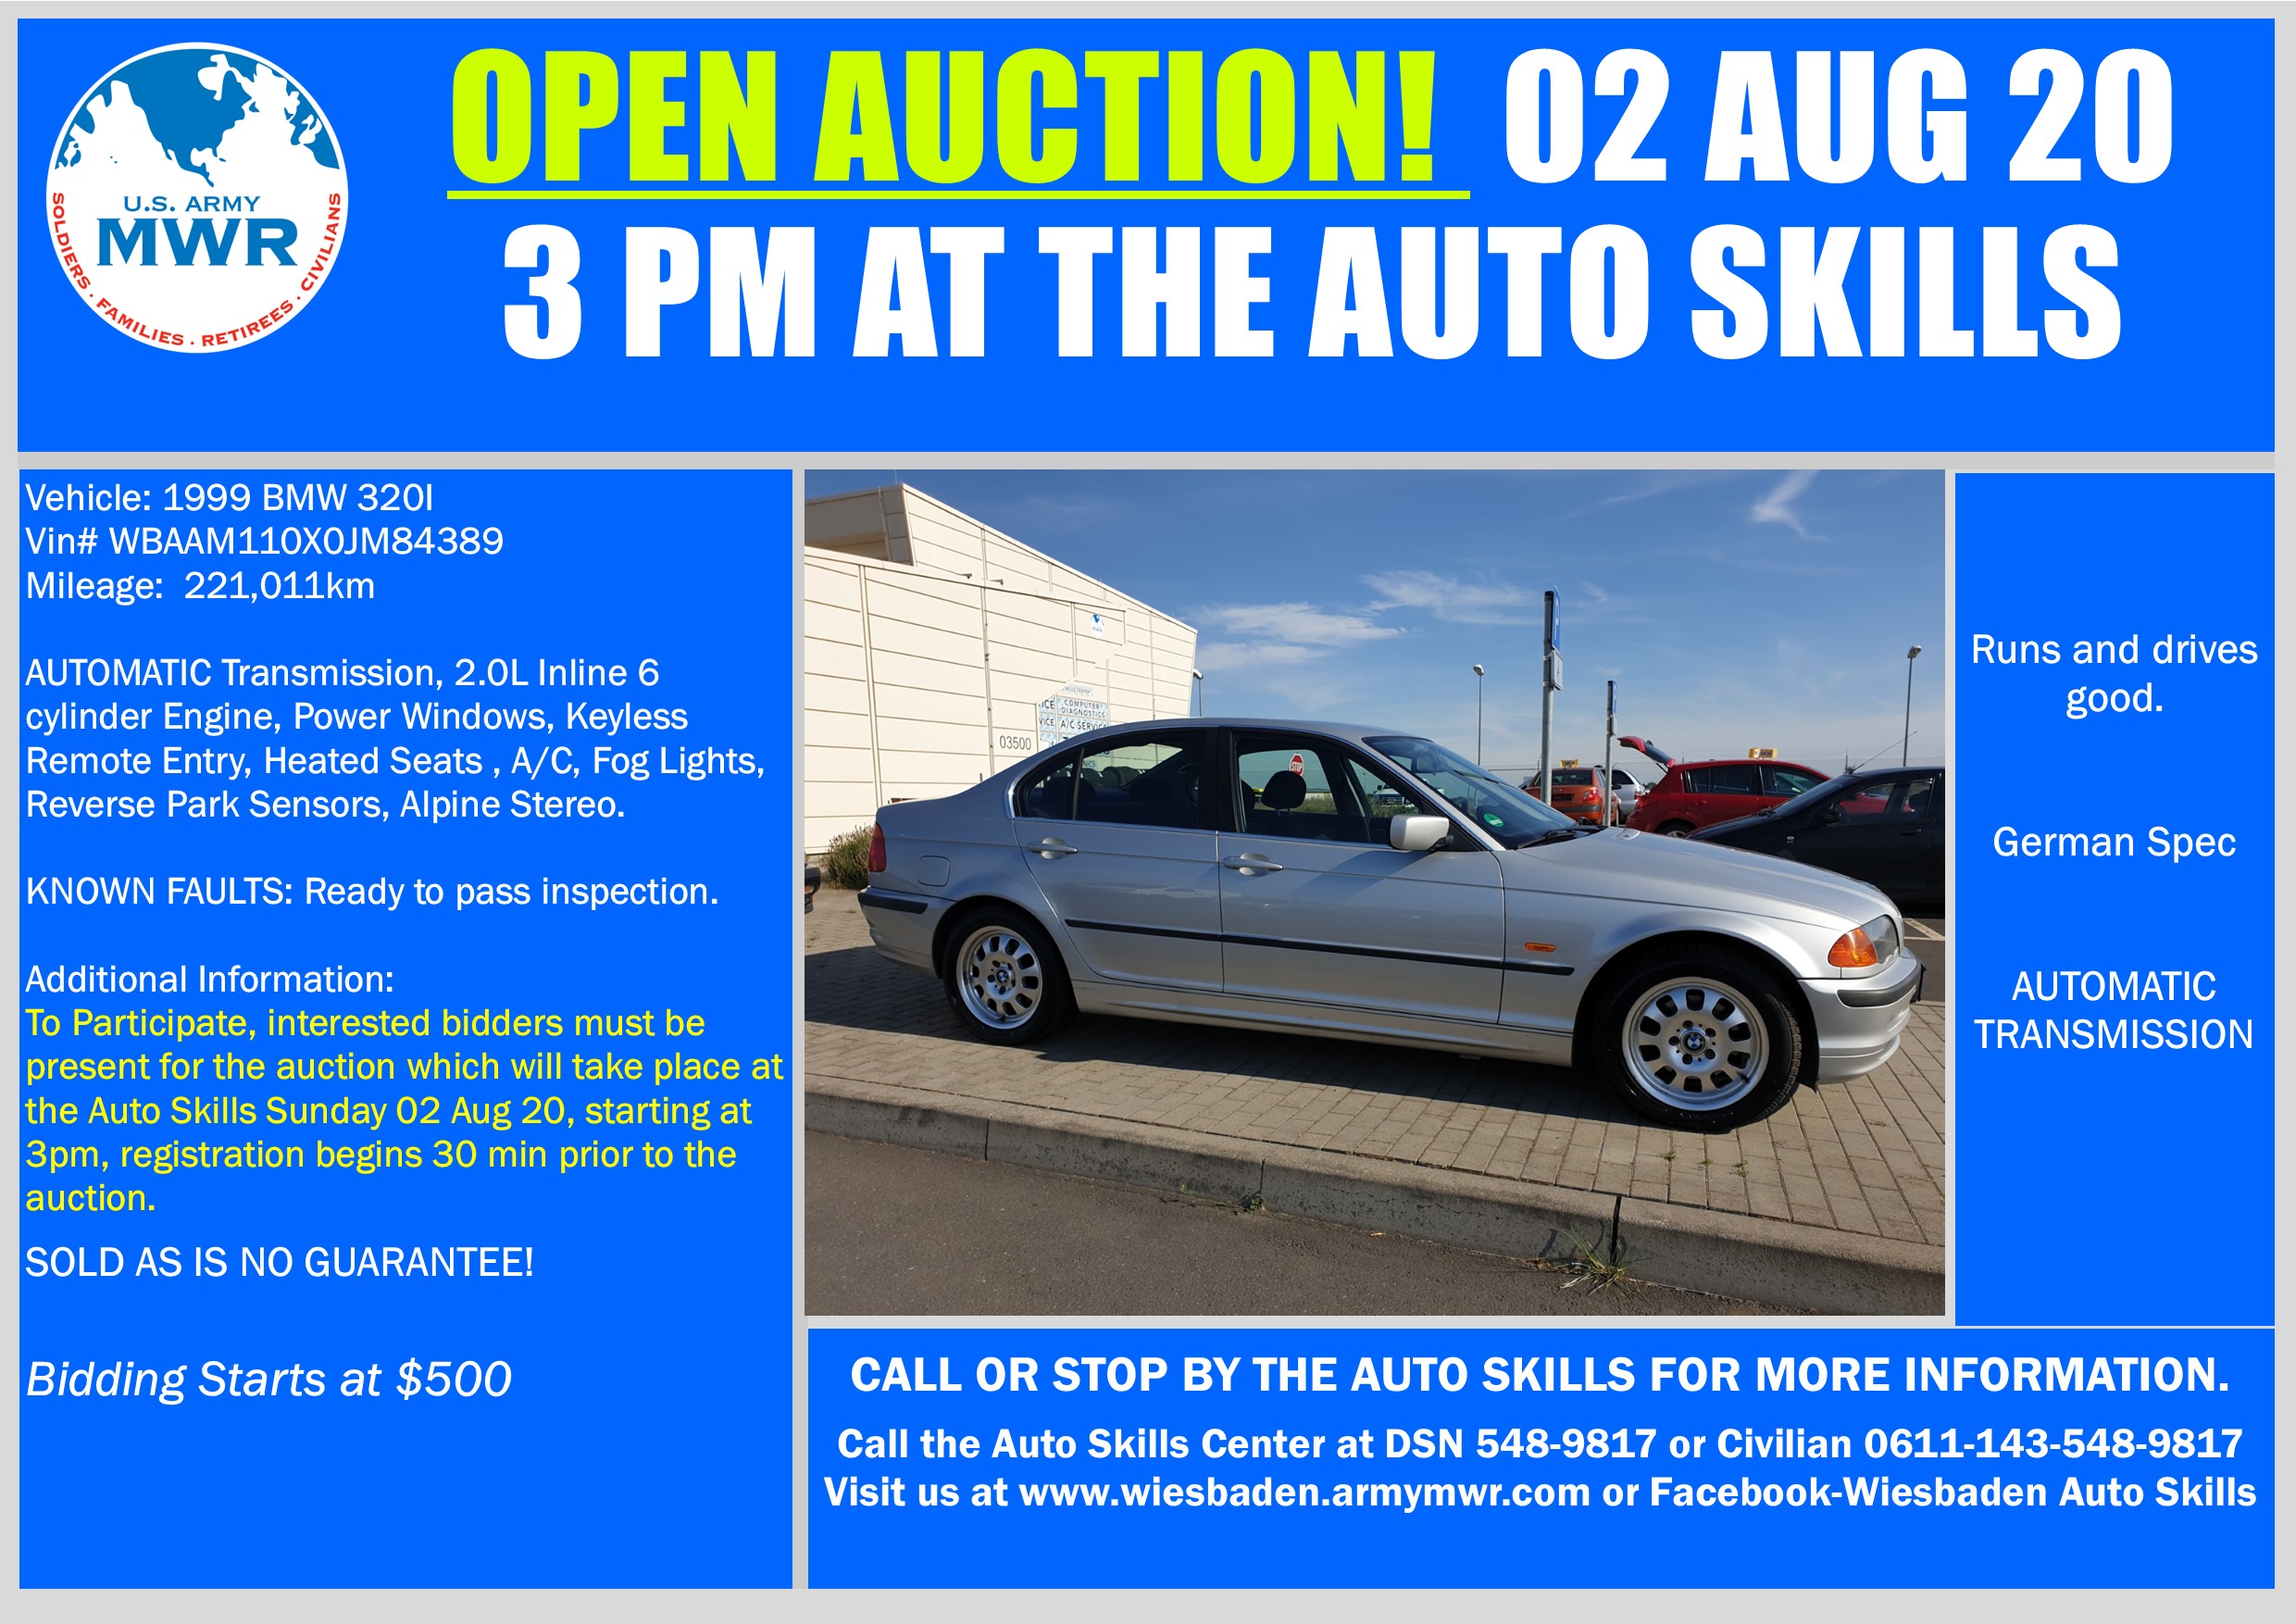 Sale BMW 320I Open Auction 2 Aug 20.jpg